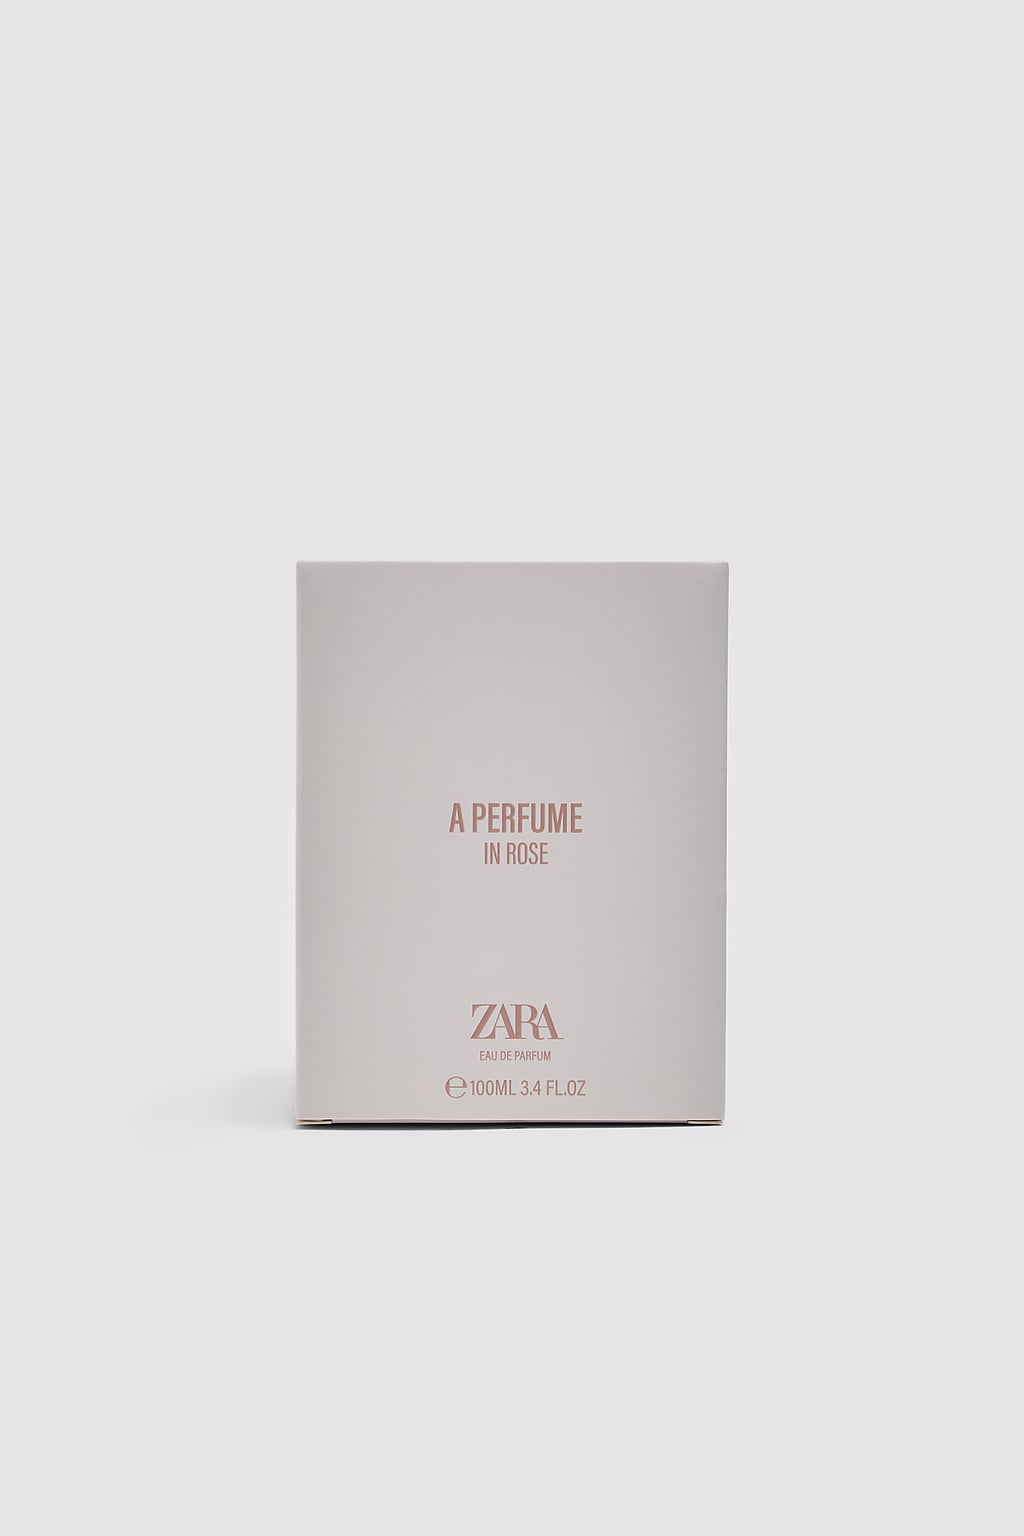 A Perfume In Rose Zara perfume - a new fragrance for women 2019